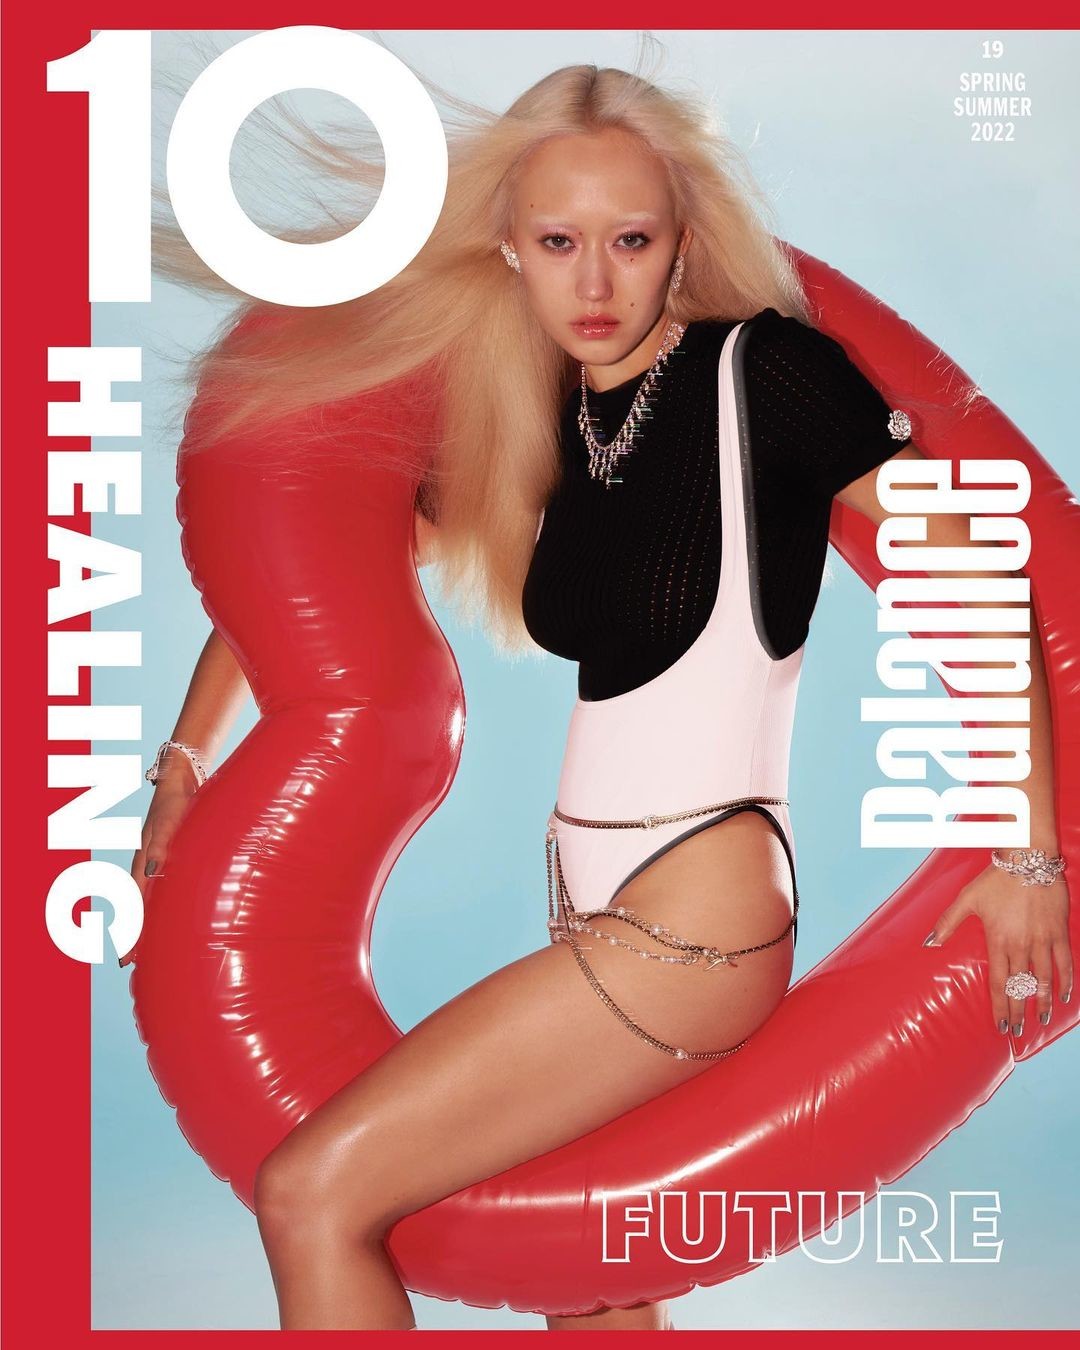 Issue 19: HEALING, BALANCE, FUTURE - 10 Magazine